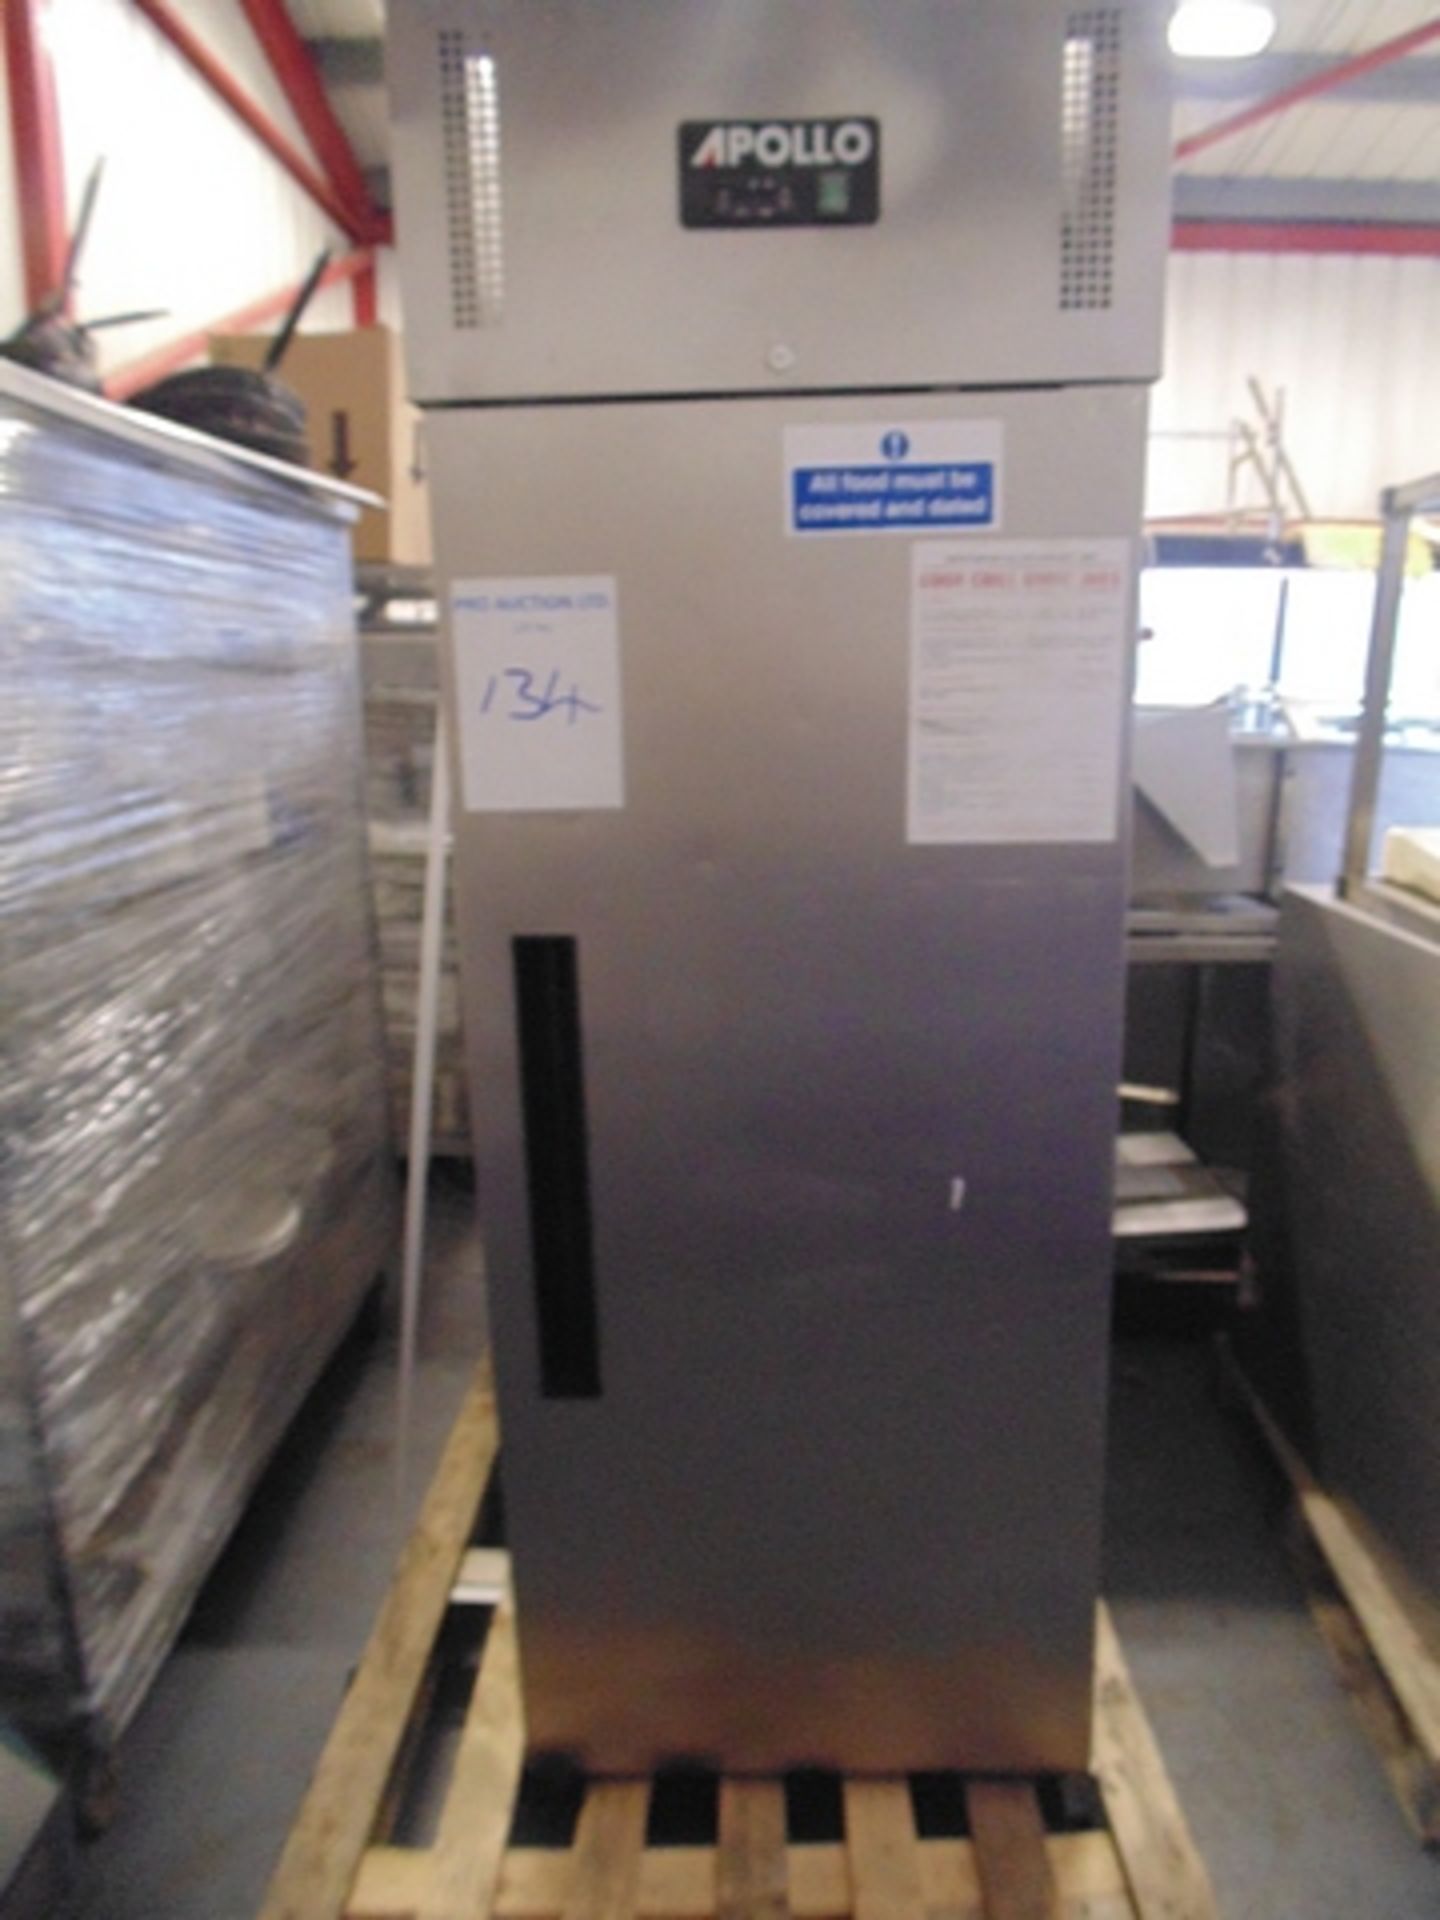 Appollo stainles steel upright refrigerator AGNRU1 600 litre capacity temperature range -2 - +8°C